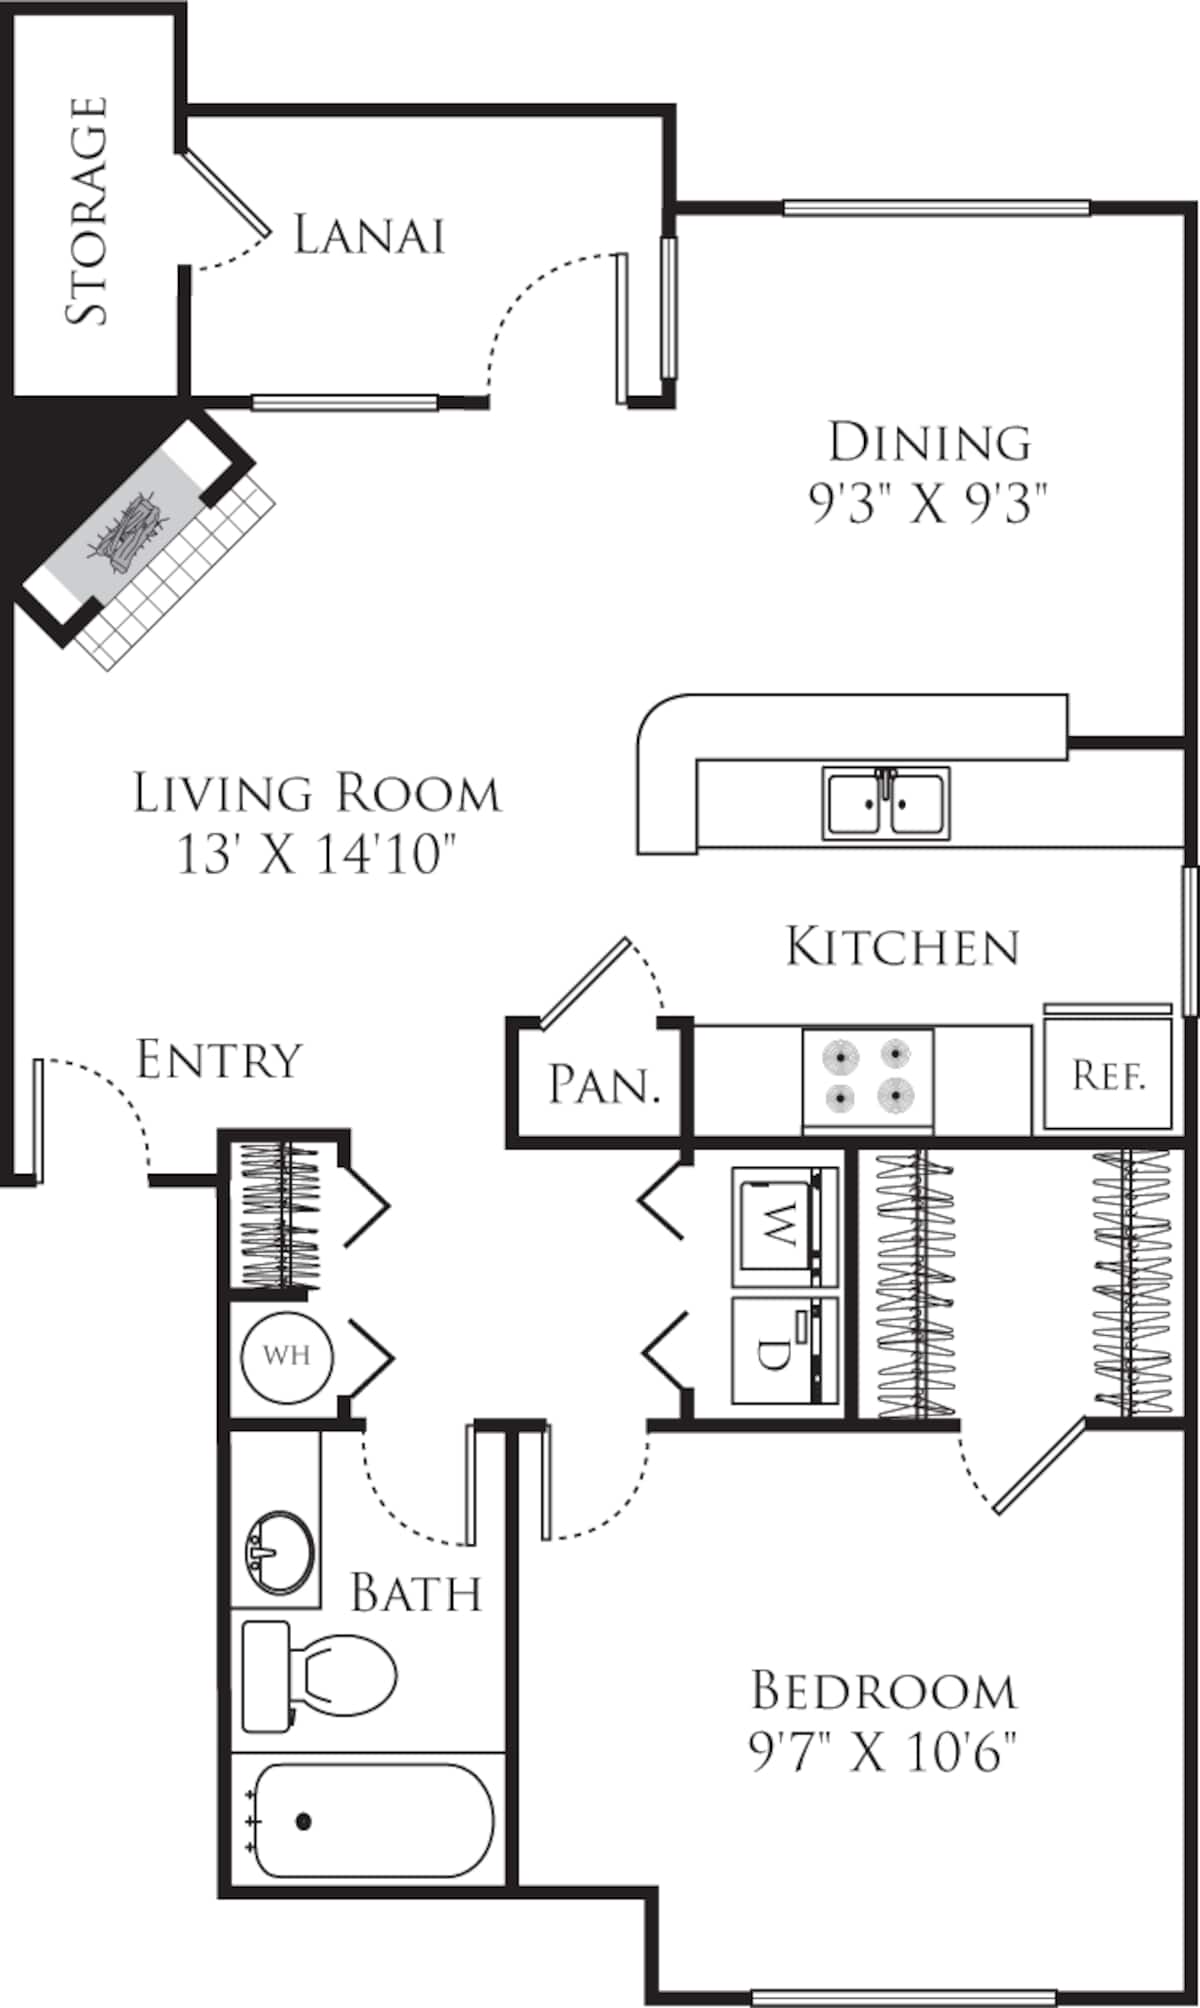 Floorplan diagram for 1A, showing 1 bedroom